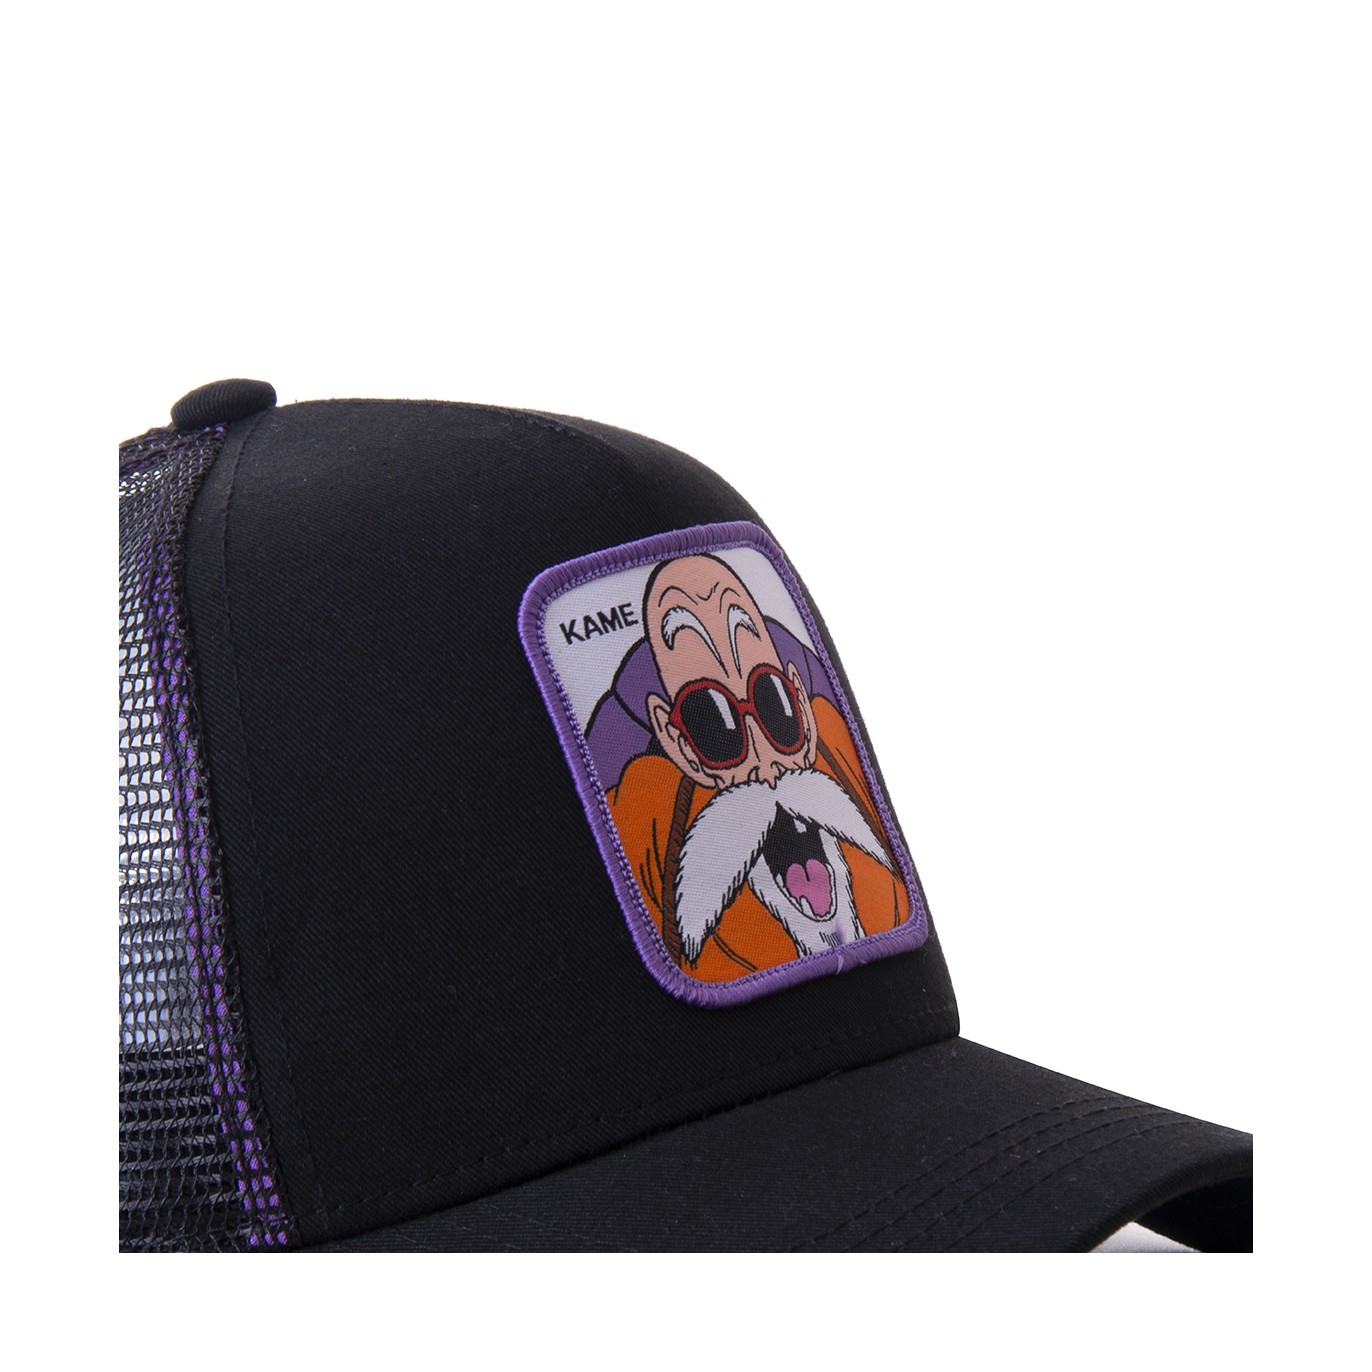 Men's Capslab Dragon Ball Z Black and Purple Cap Capslab - 3